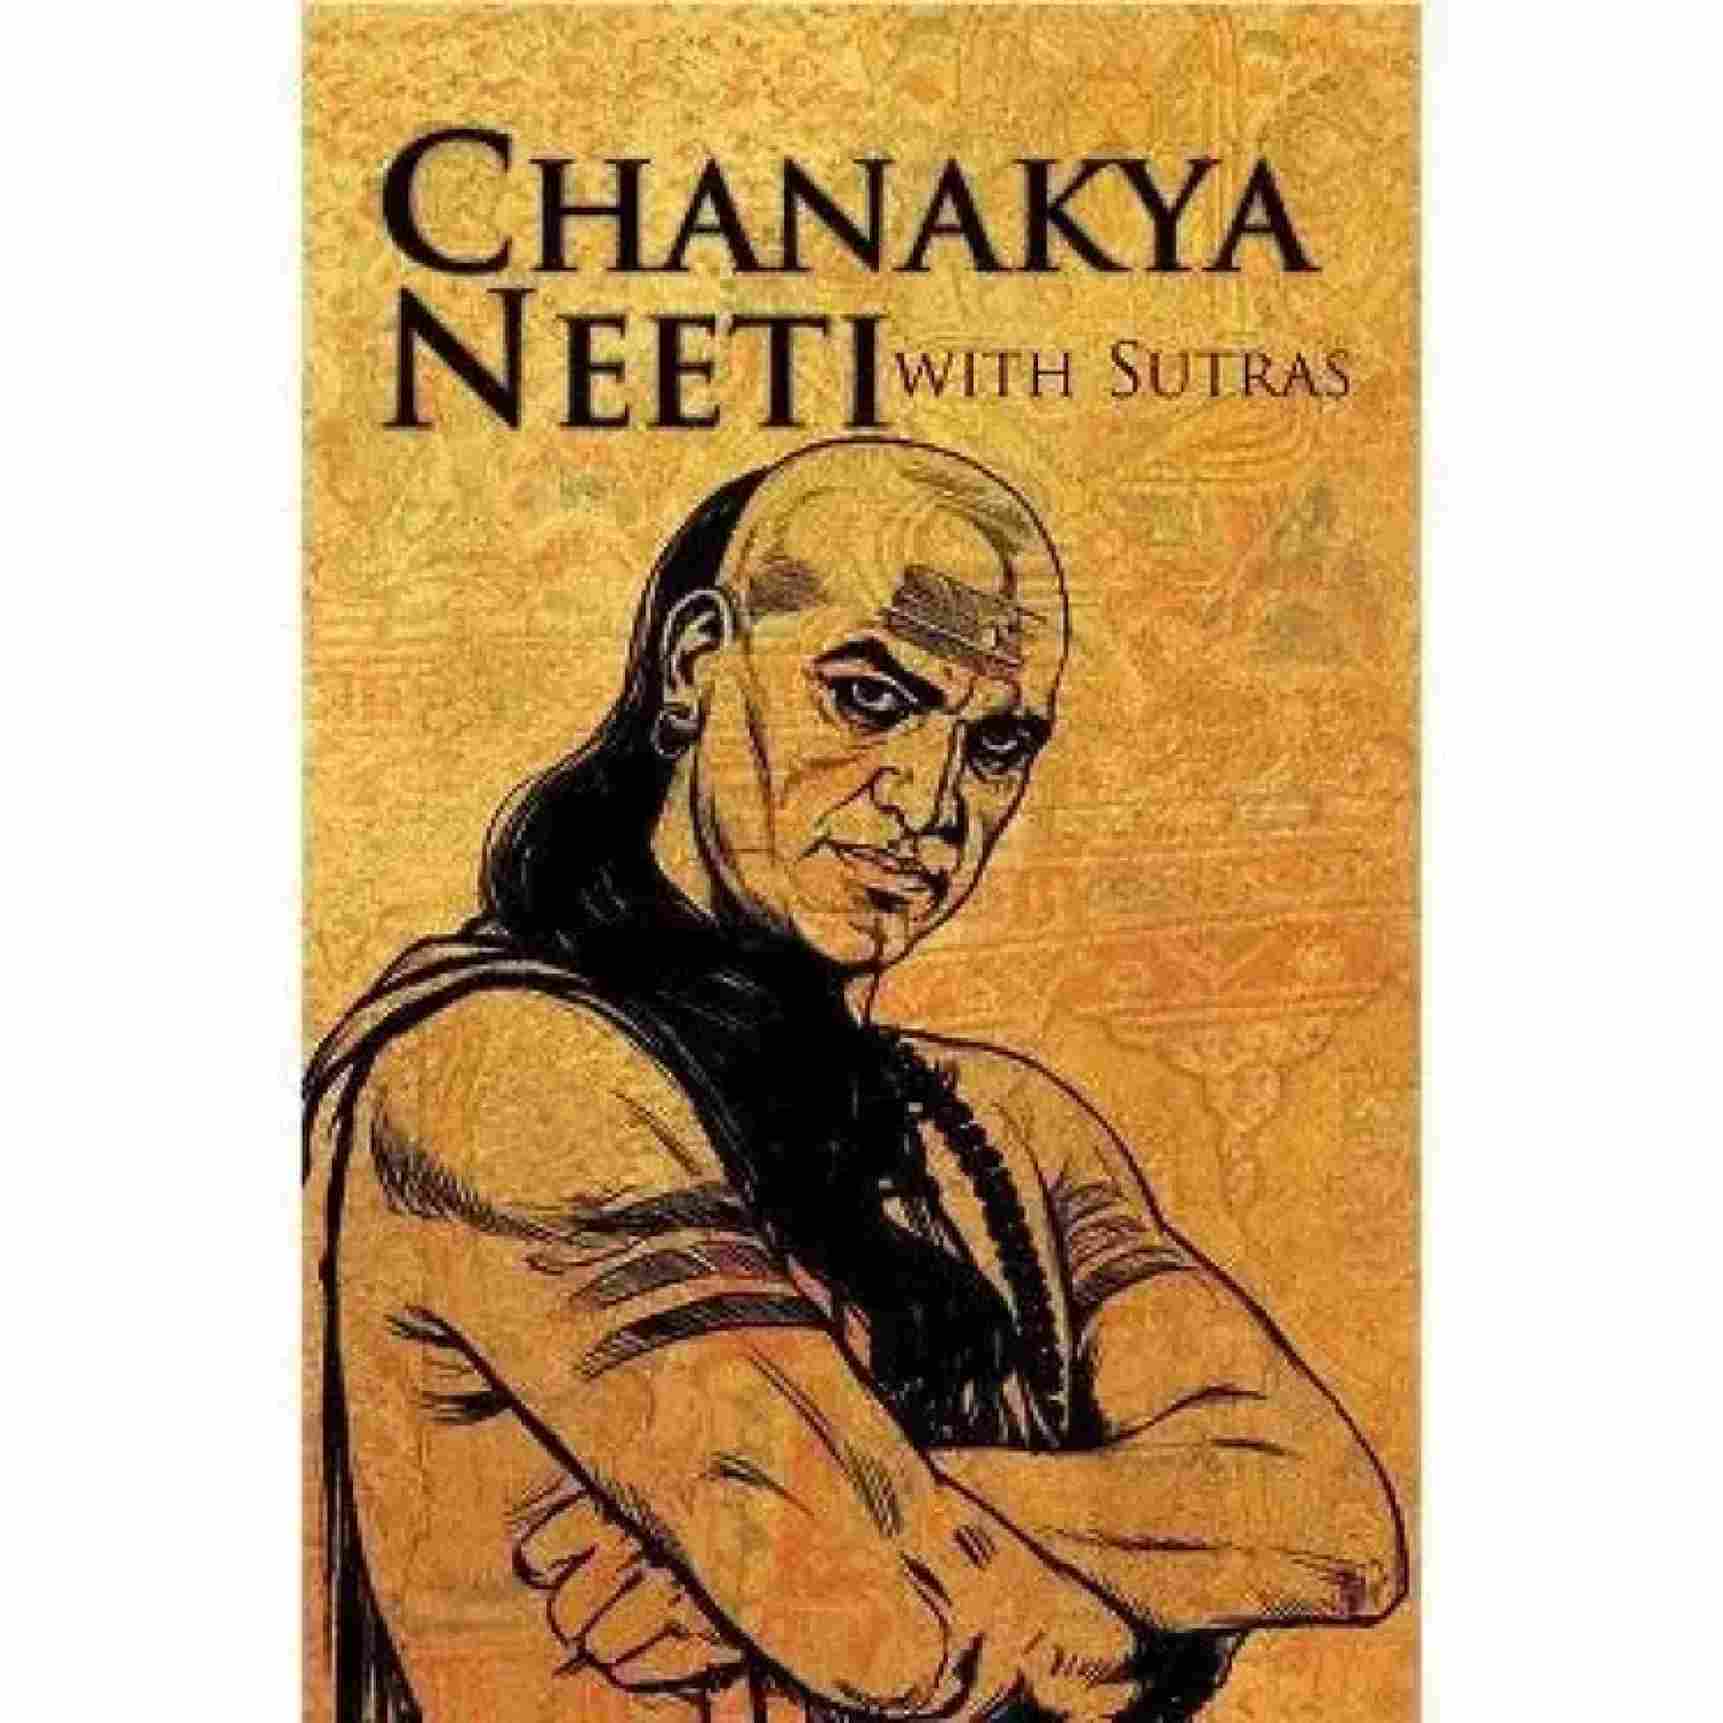 Chanakya Neeti (including sutras) (Paperback) - Chanakya